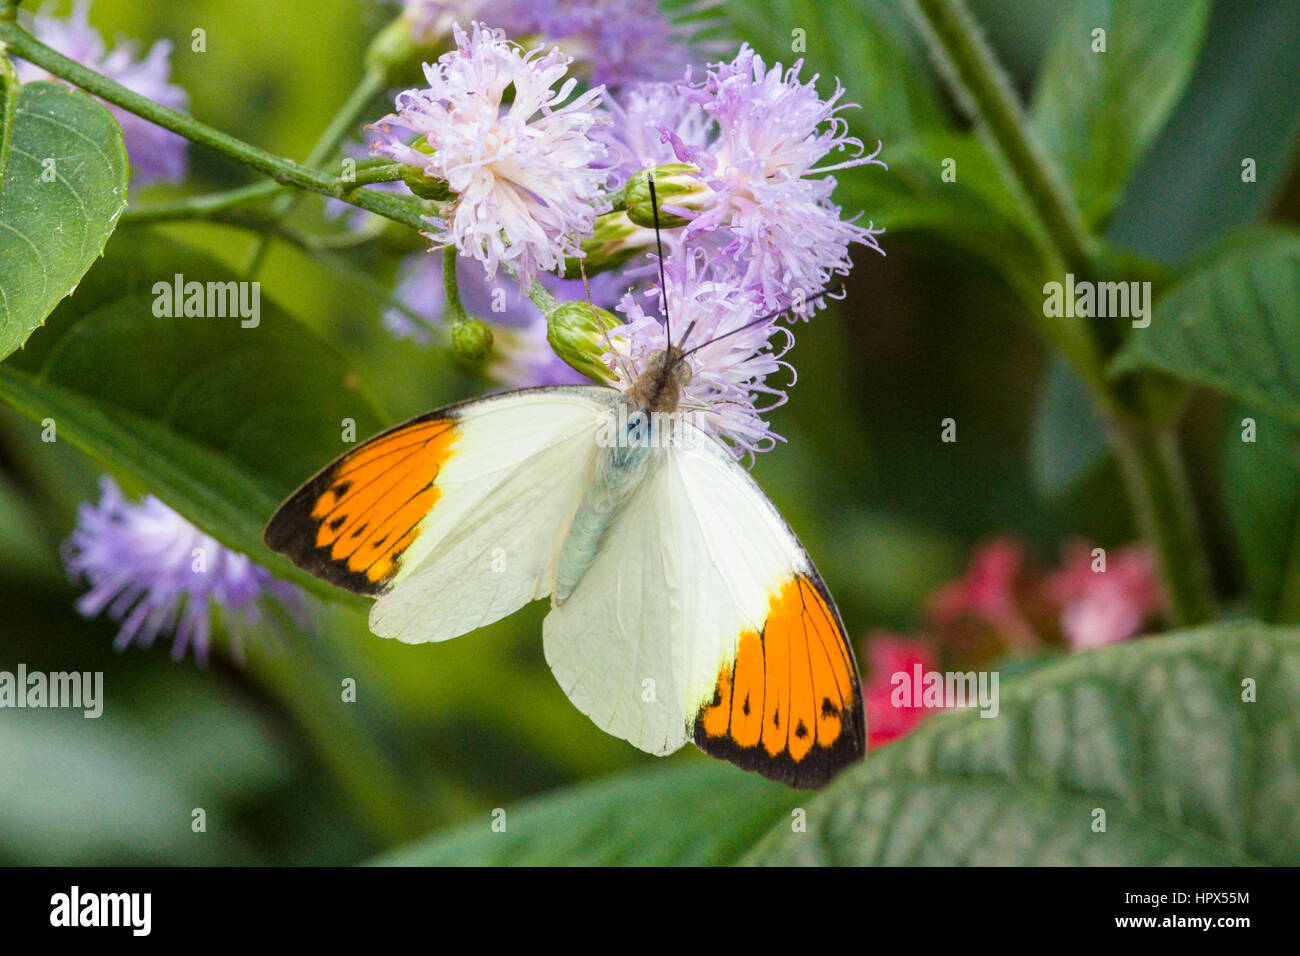 Grande punta arancione (Hebomoia glancippe) farfalla Foto Stock